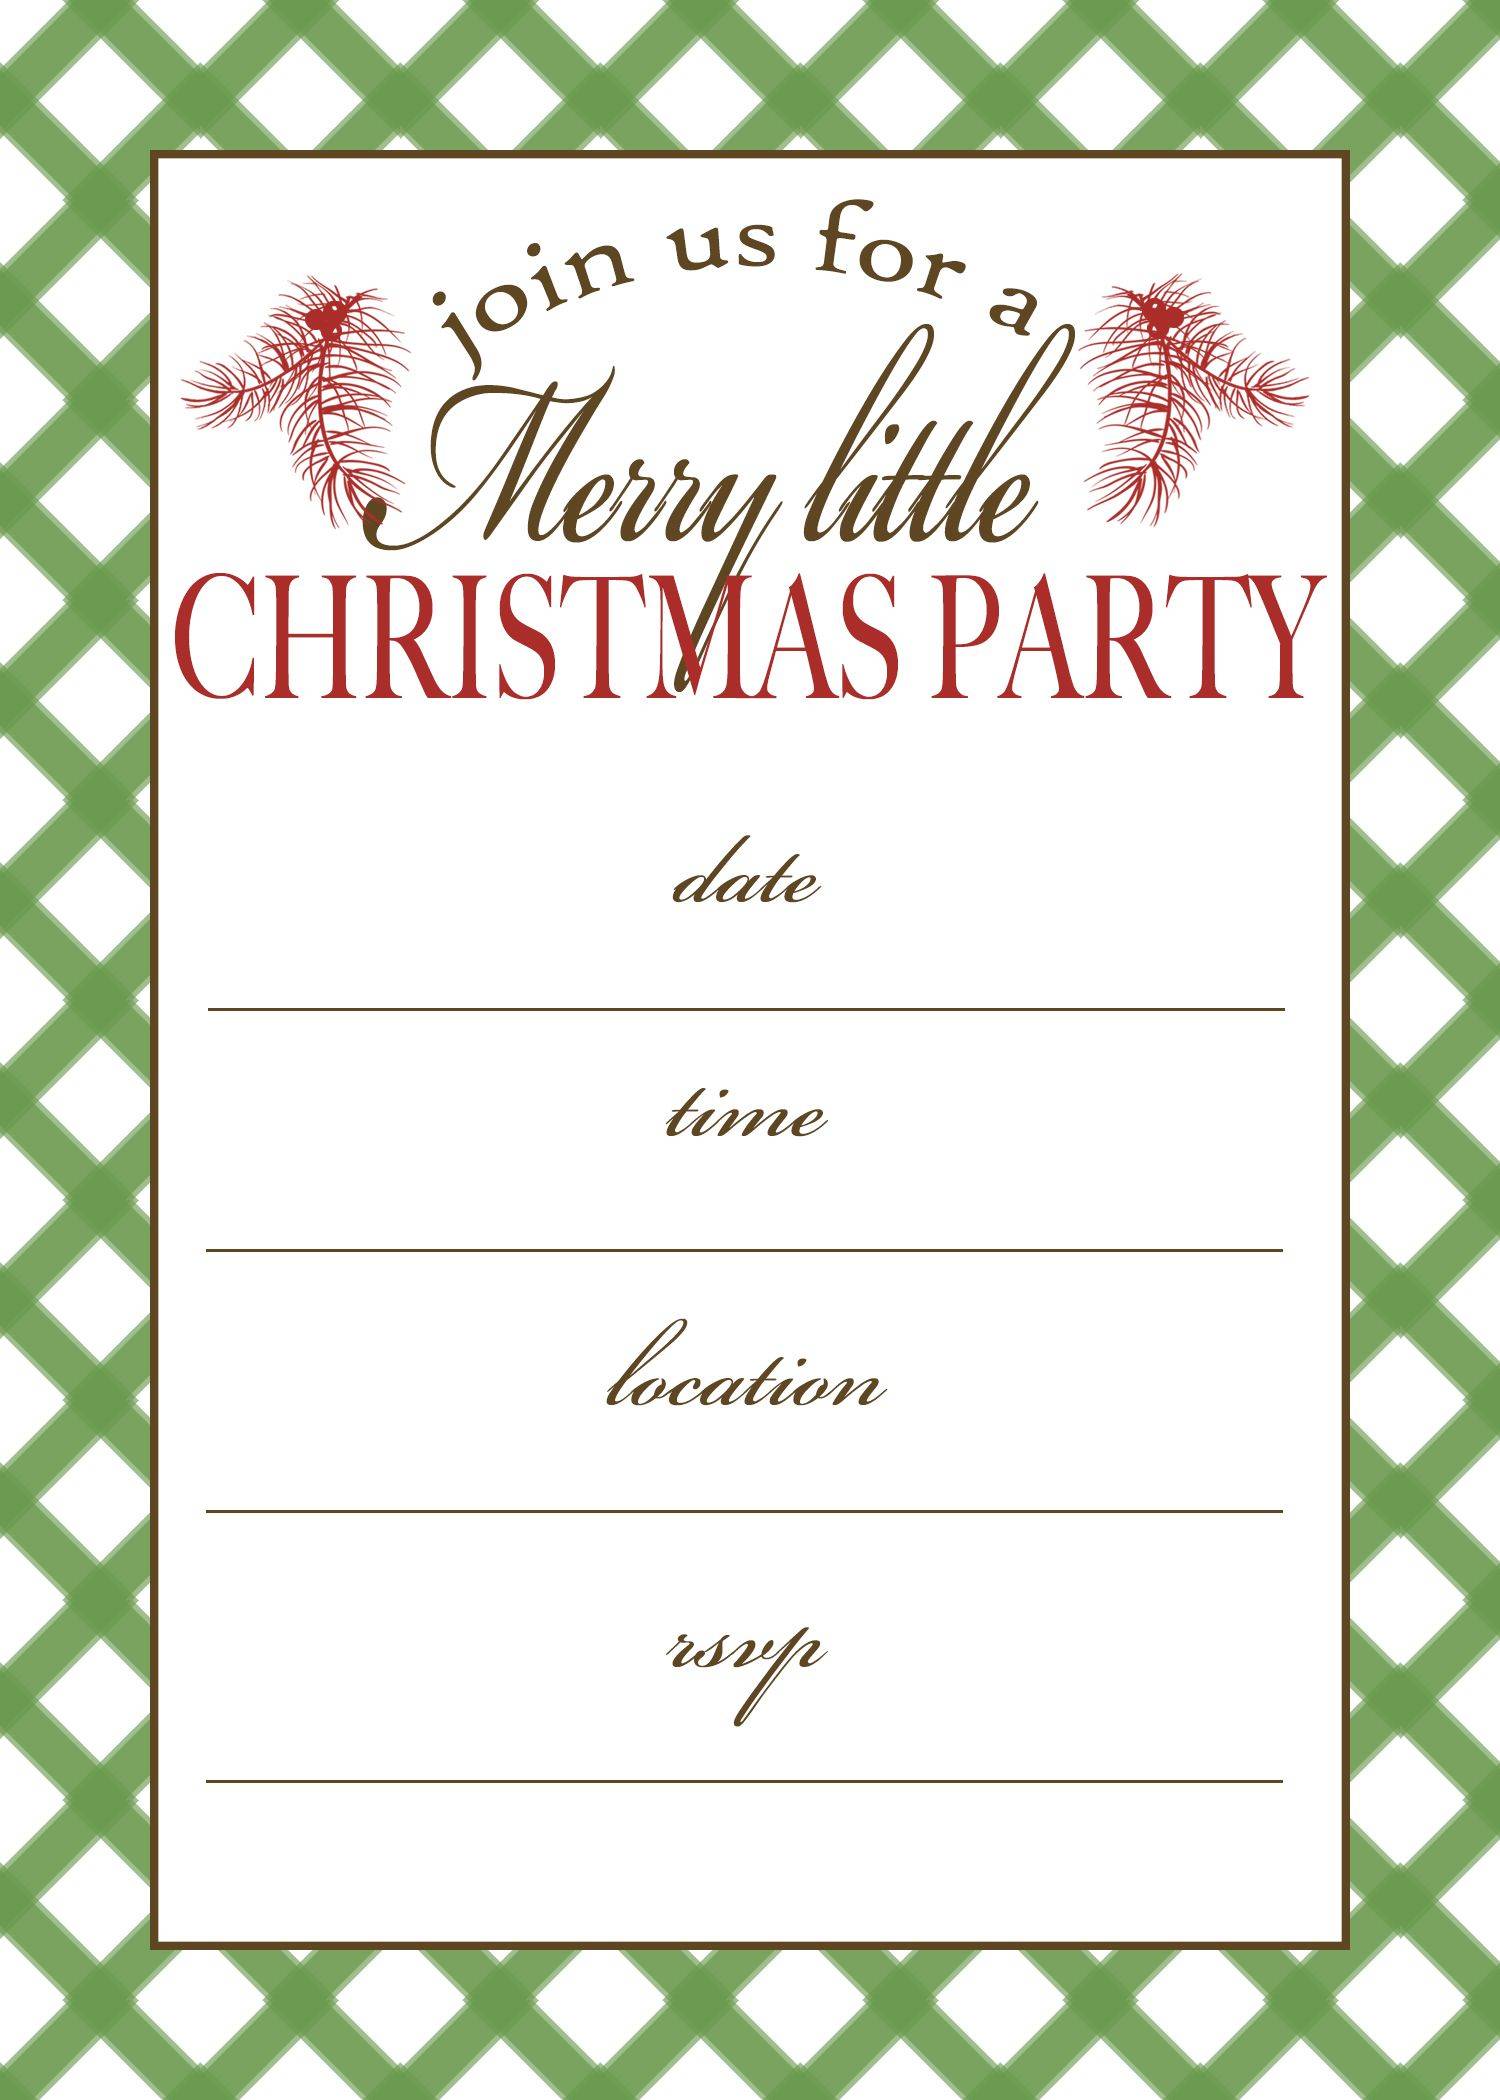 Sample Christmas Card Invitation Letter Home Design